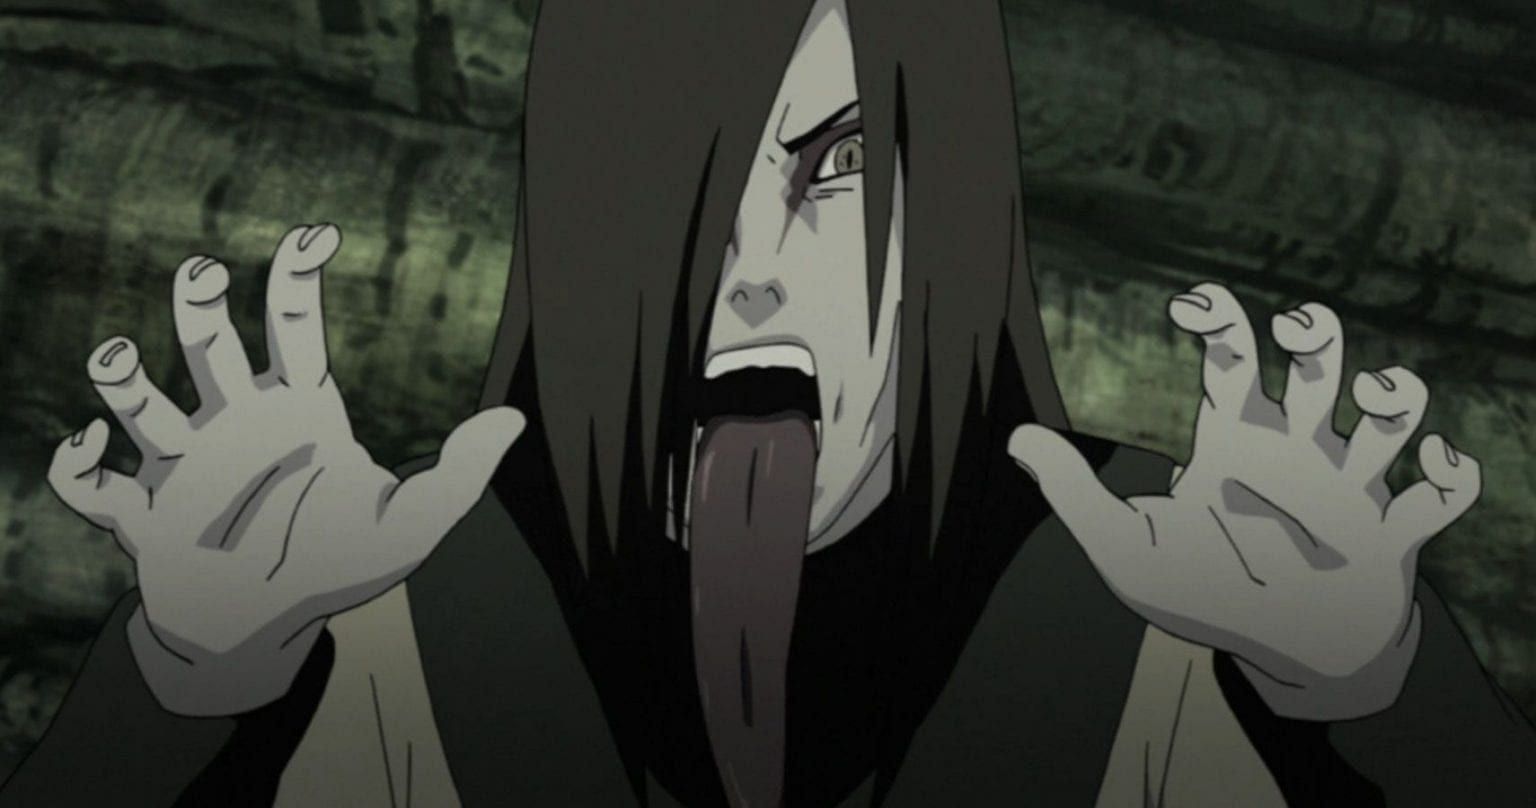 Orochimaru as seen in Naruto (Image via Studio Pierrot)